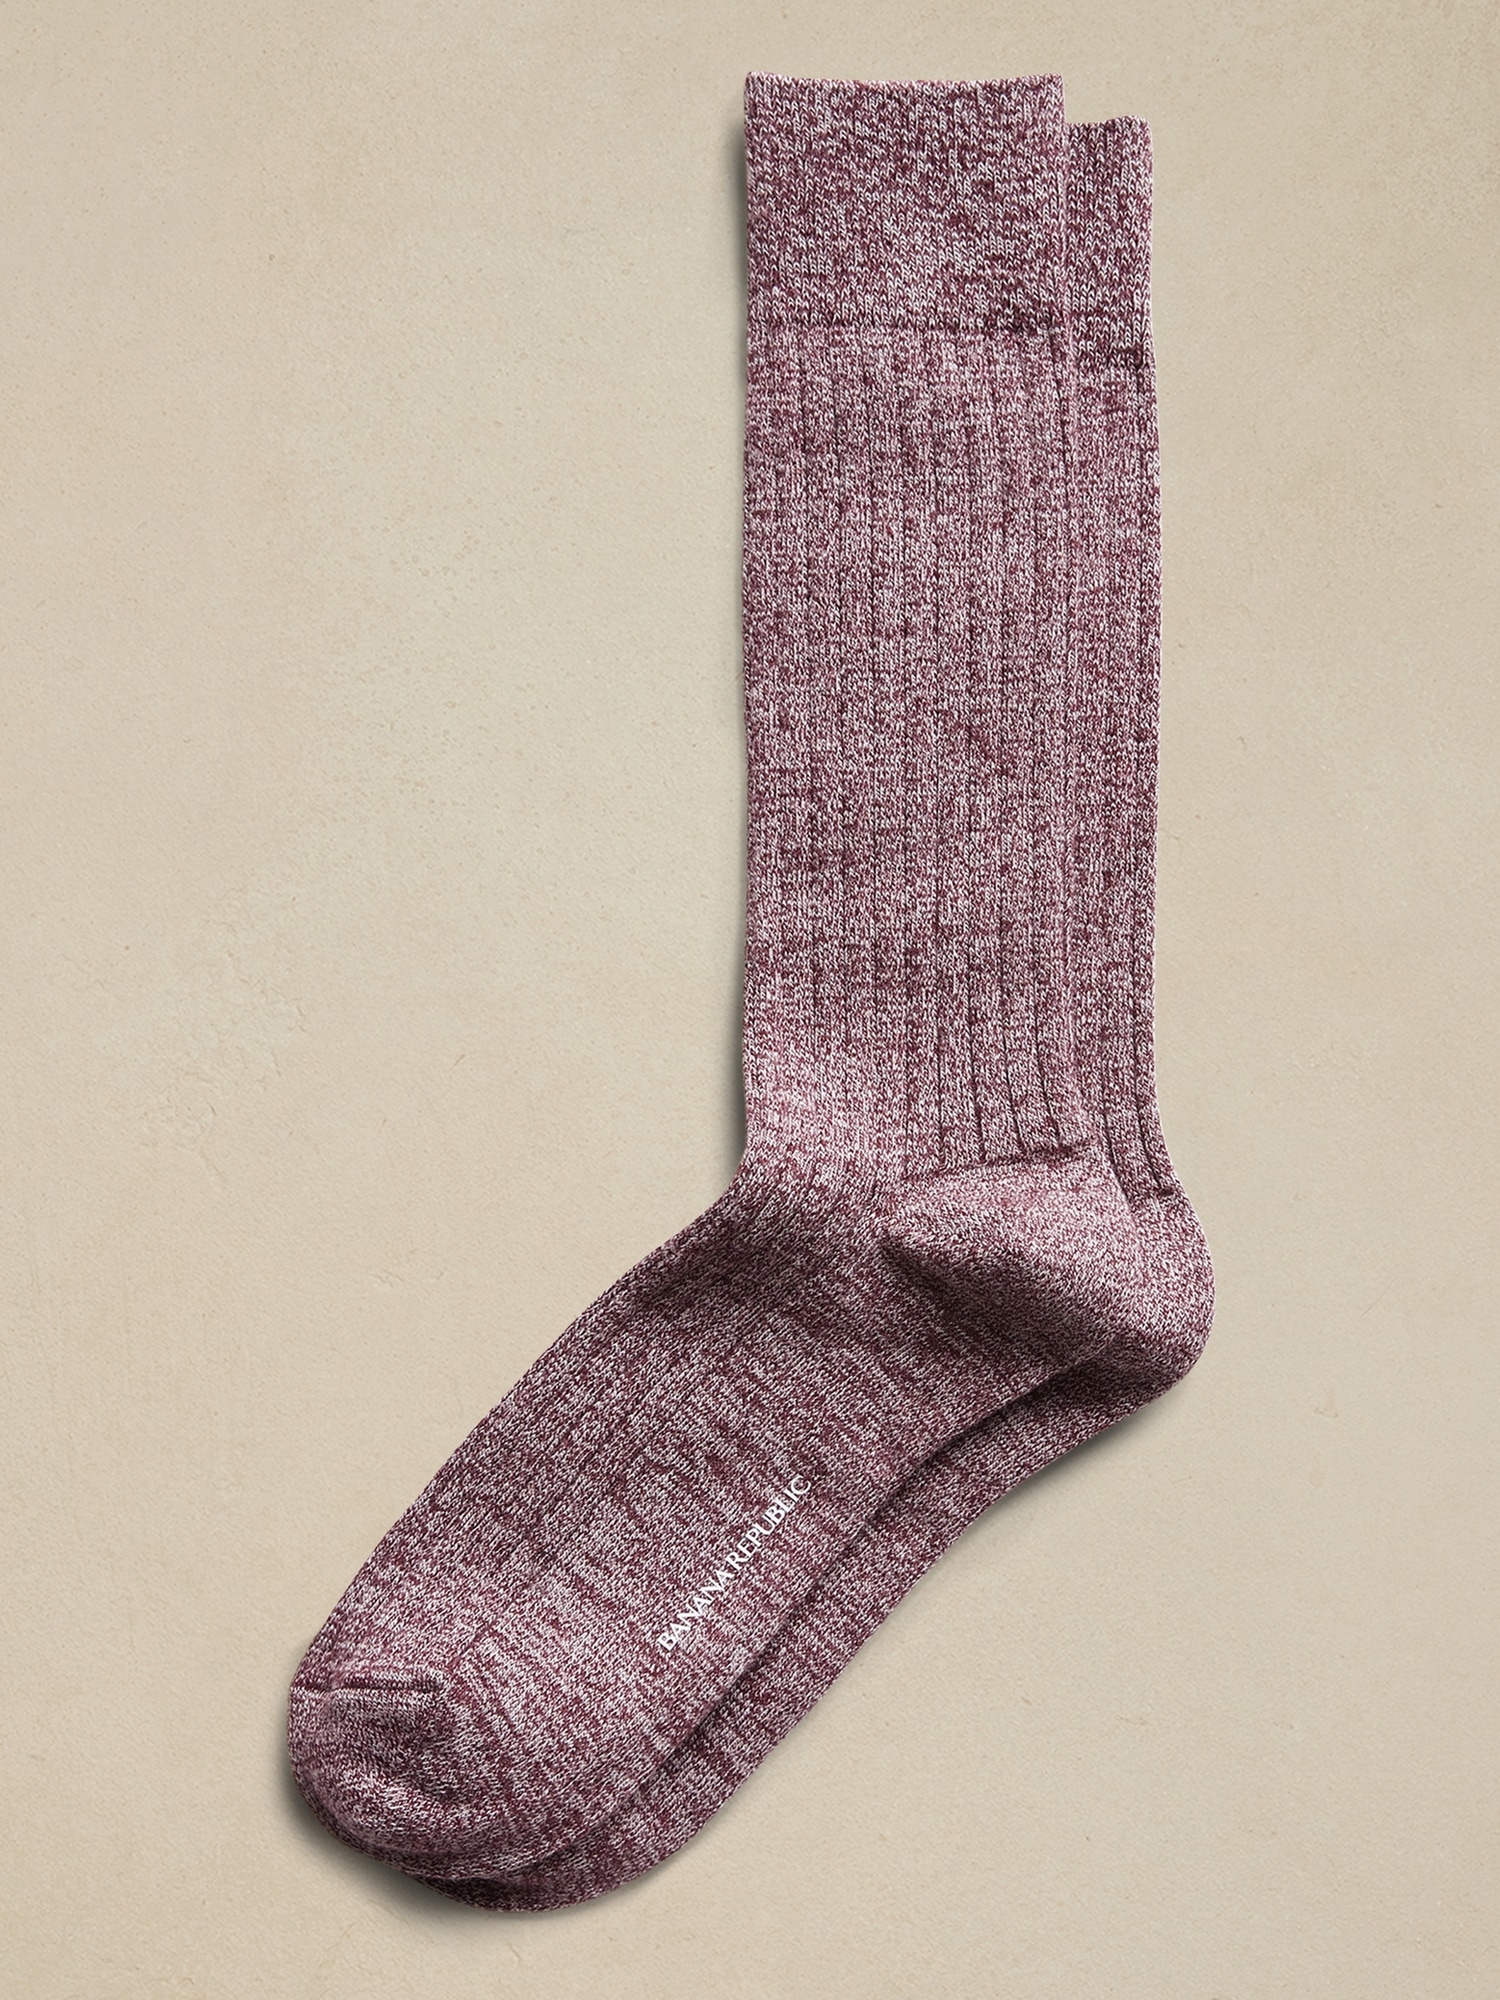 Updated Marl Ribbed Sock